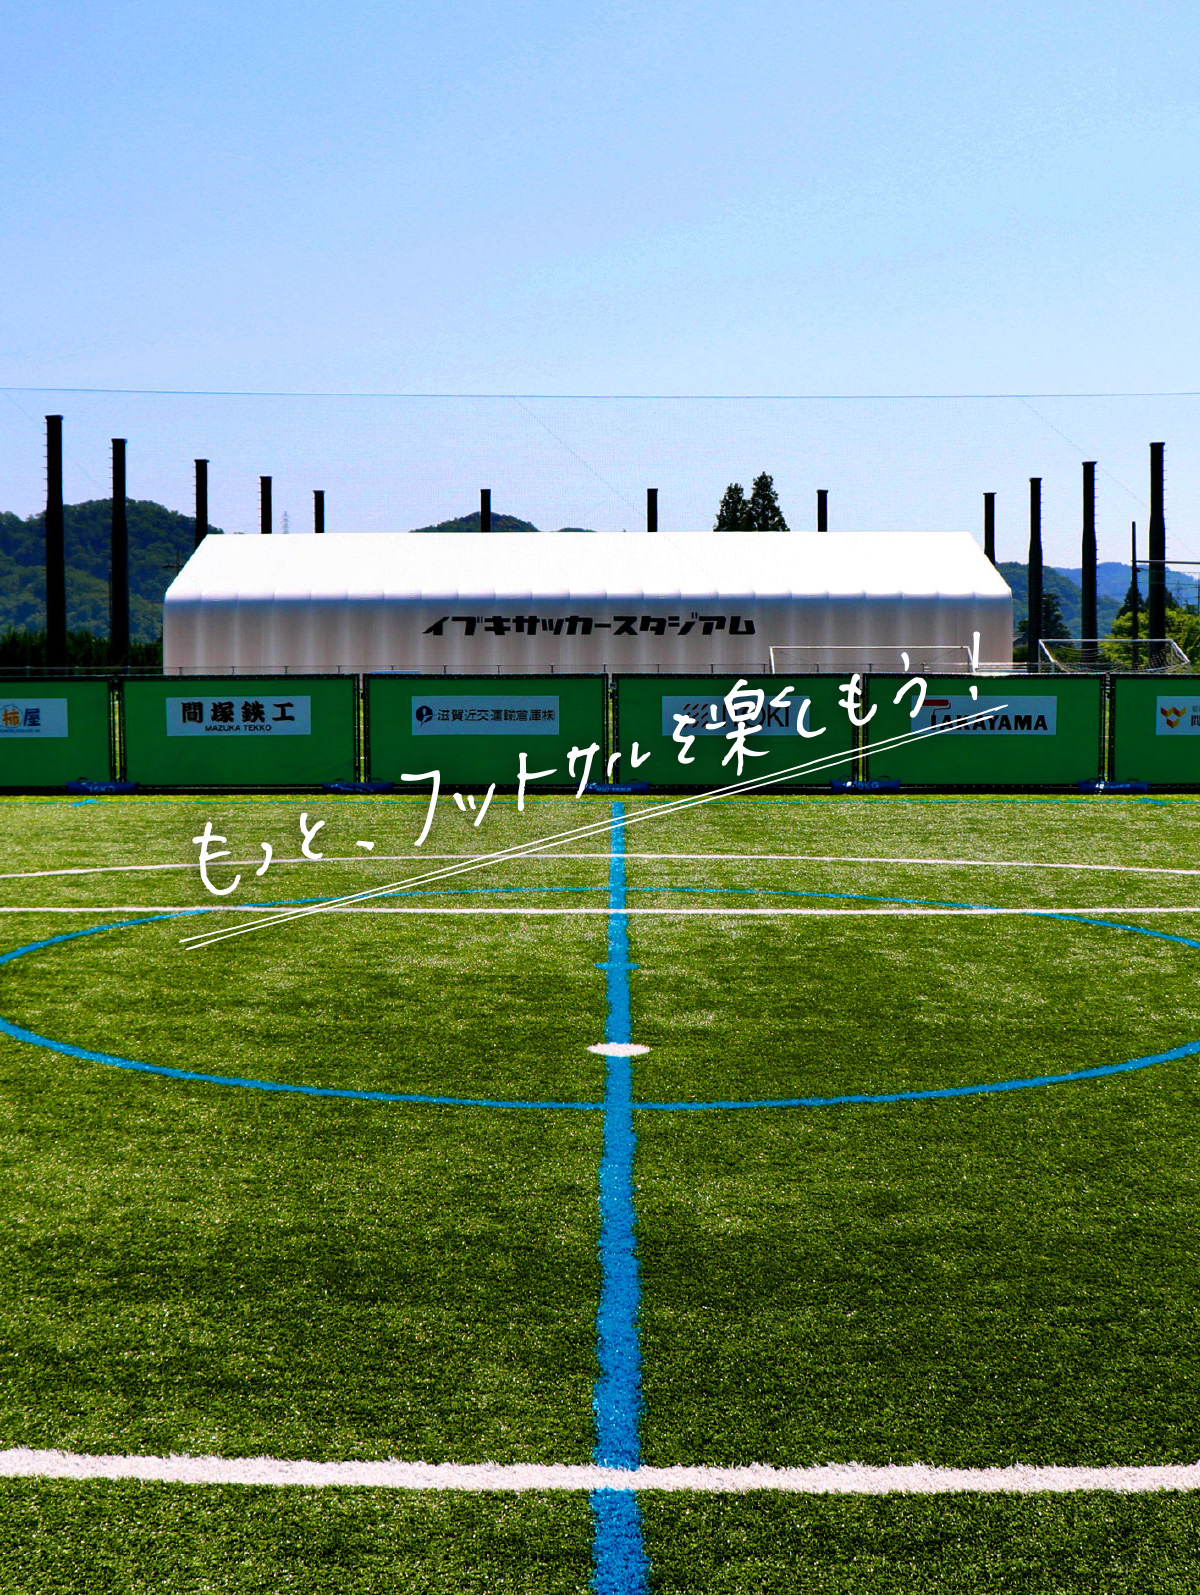 Ibuki Soccer Stadium イブキサッカースタジアムでチーム 仲間 ひとりで フットサル楽しむ